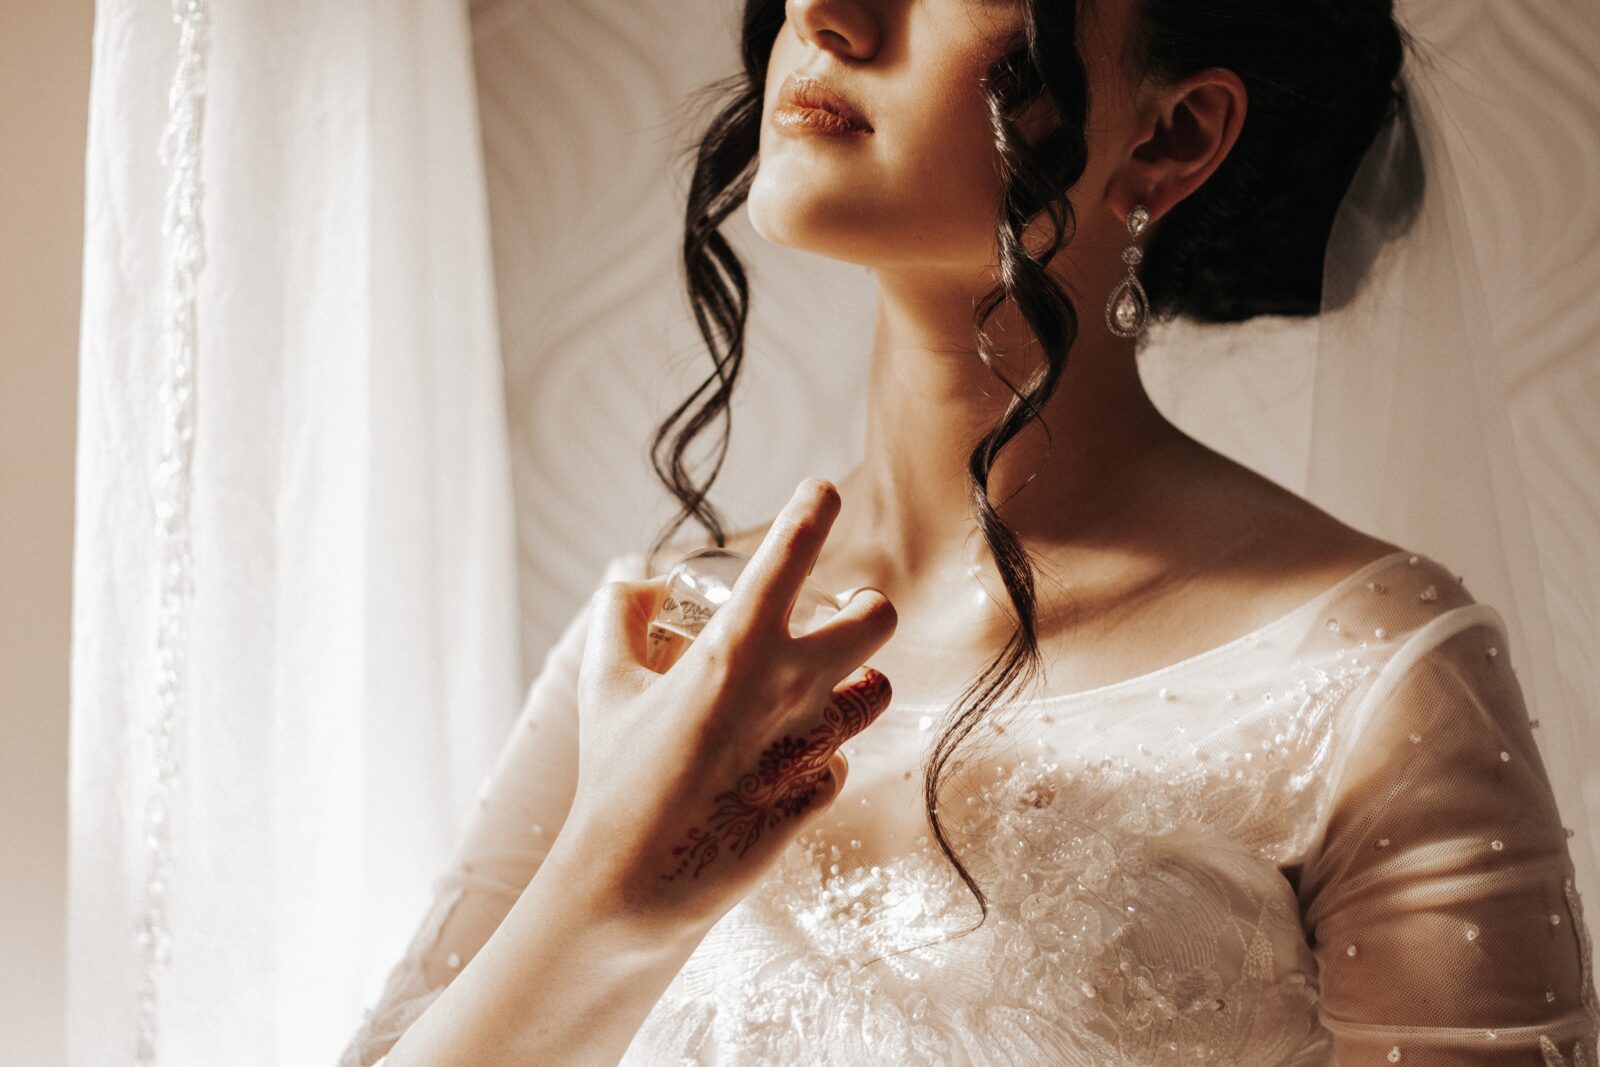 Lady in wedding dress spraying perfume onto neck